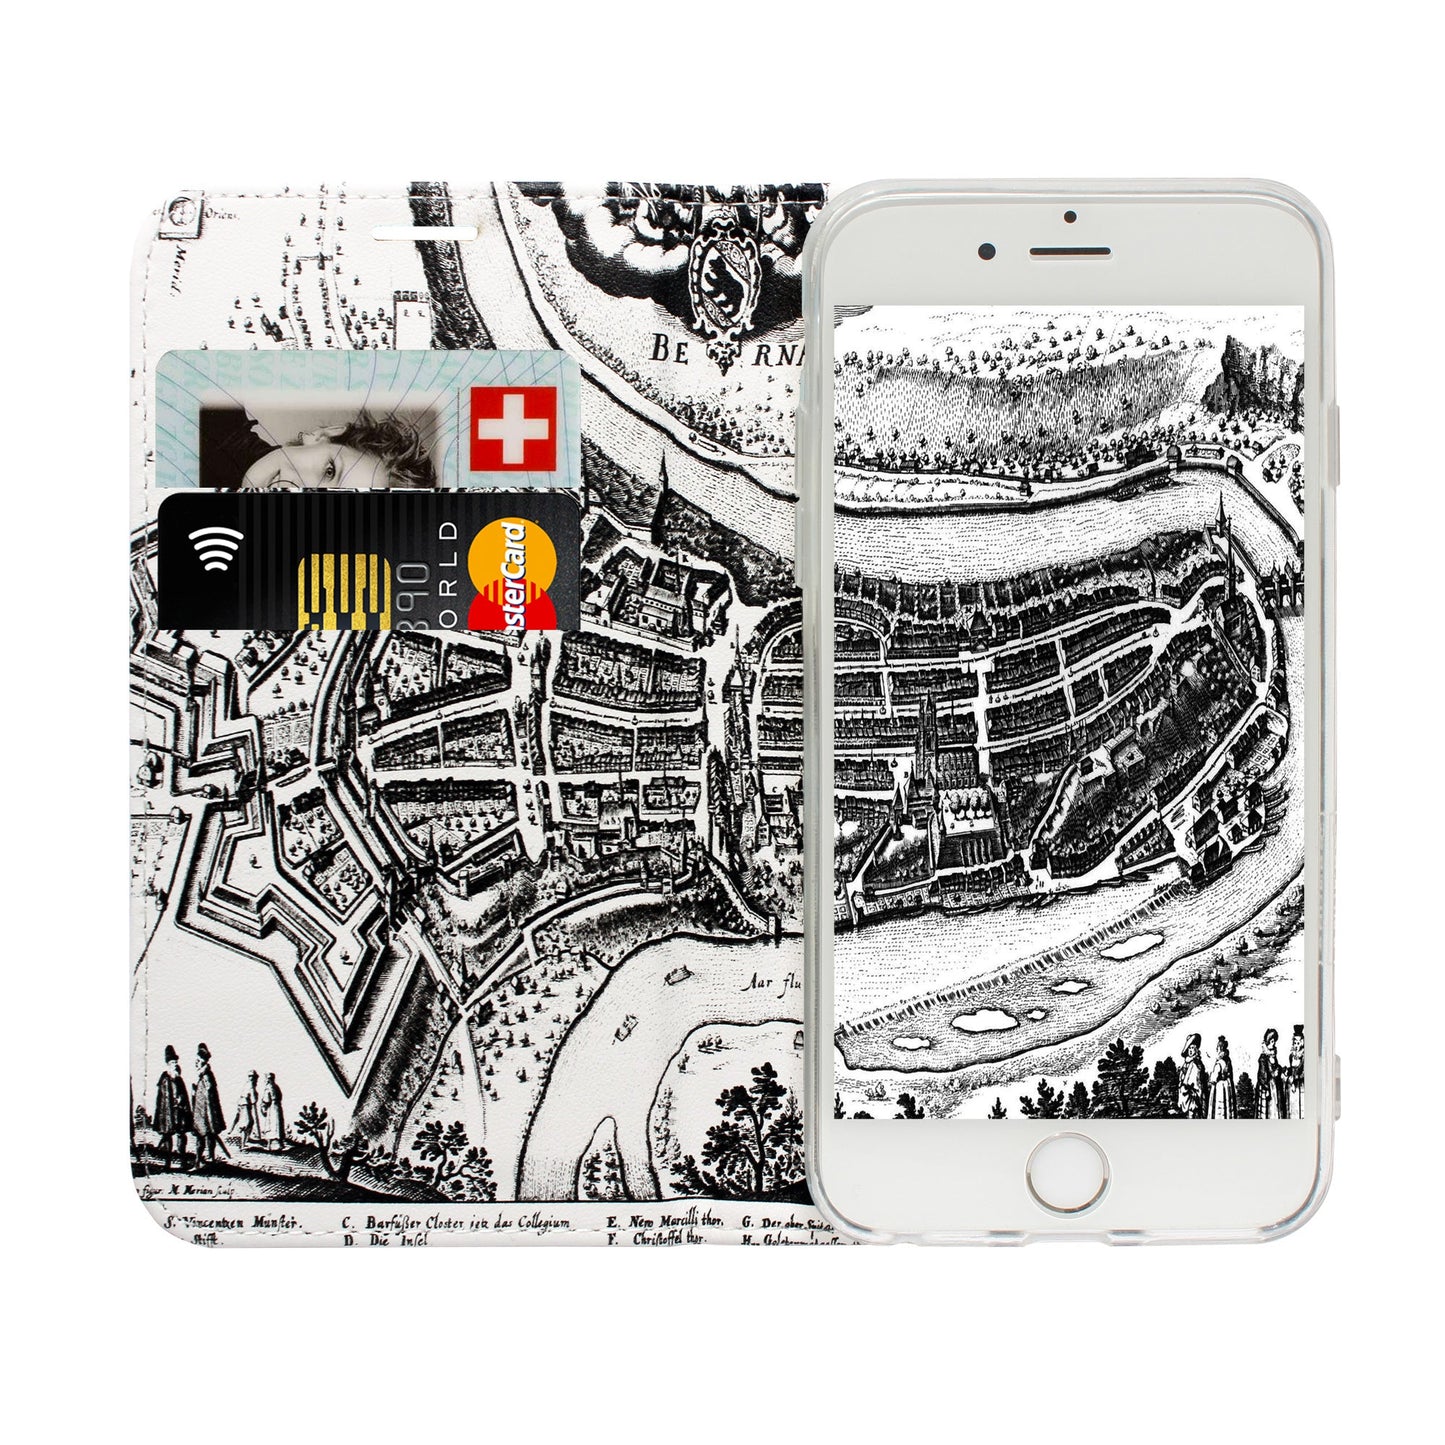 Bern Merian Panorama Case für iPhone 5/5S/SE 1